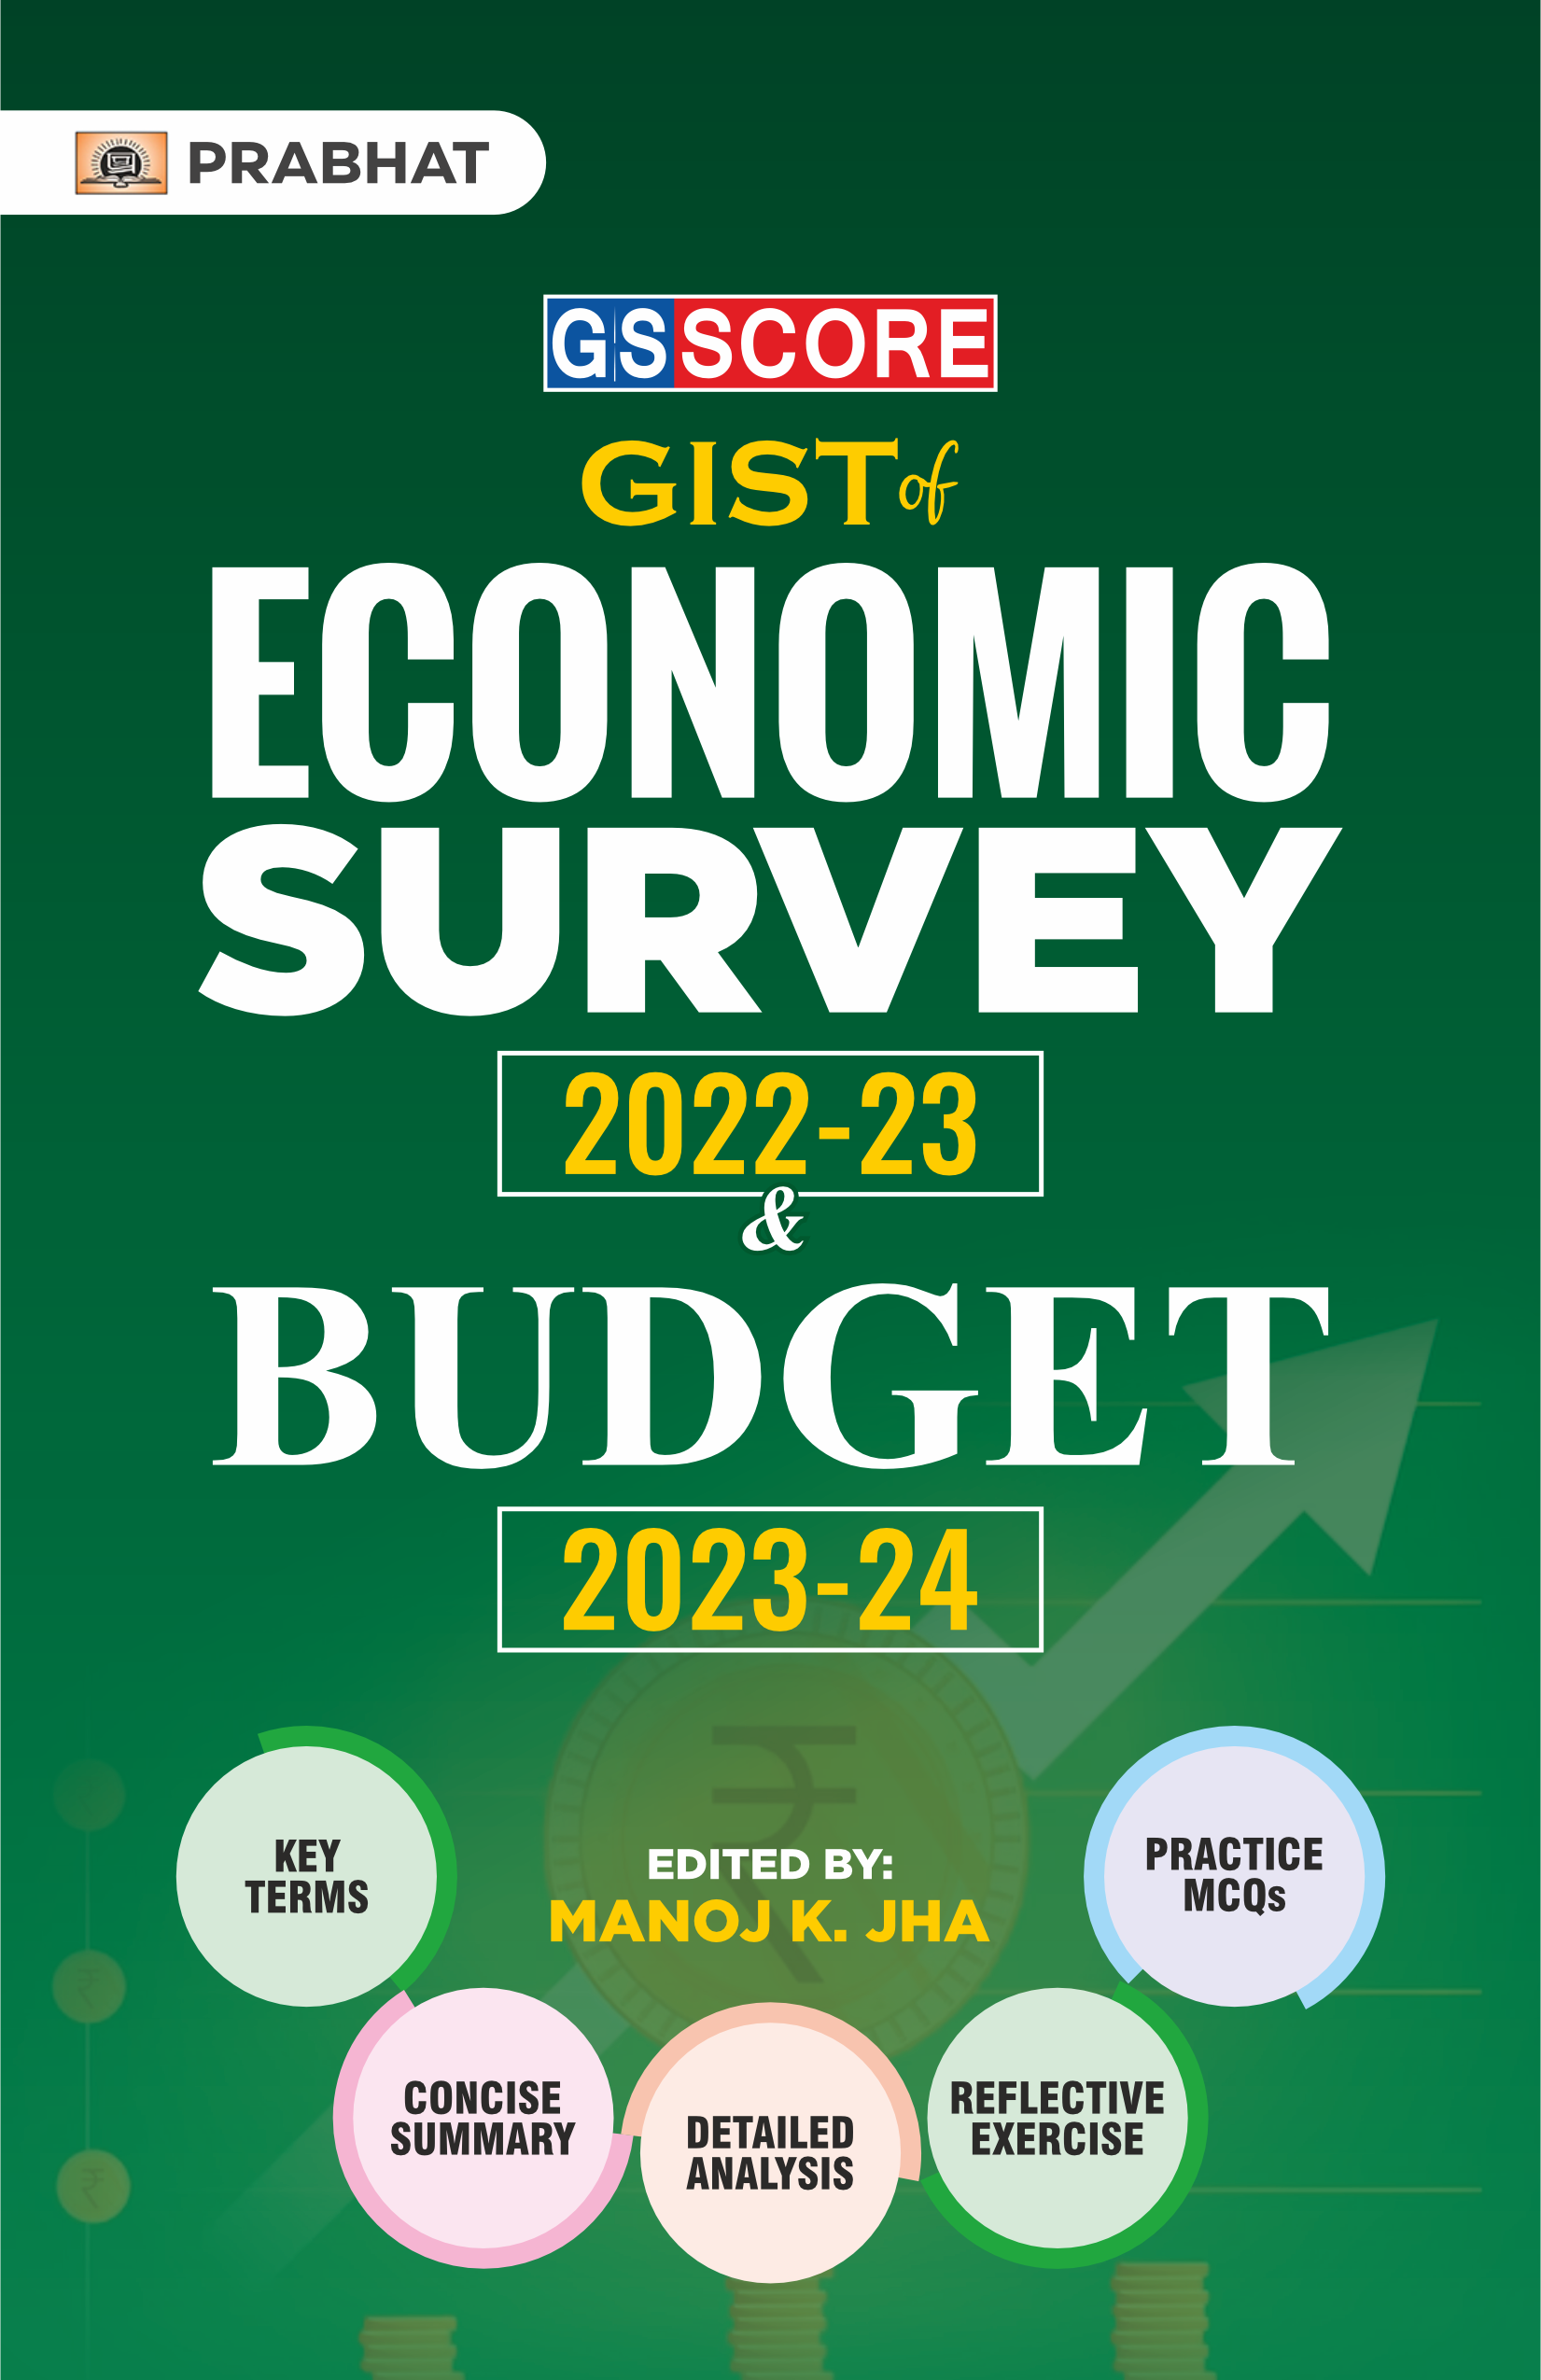 Budget and Economic Survey